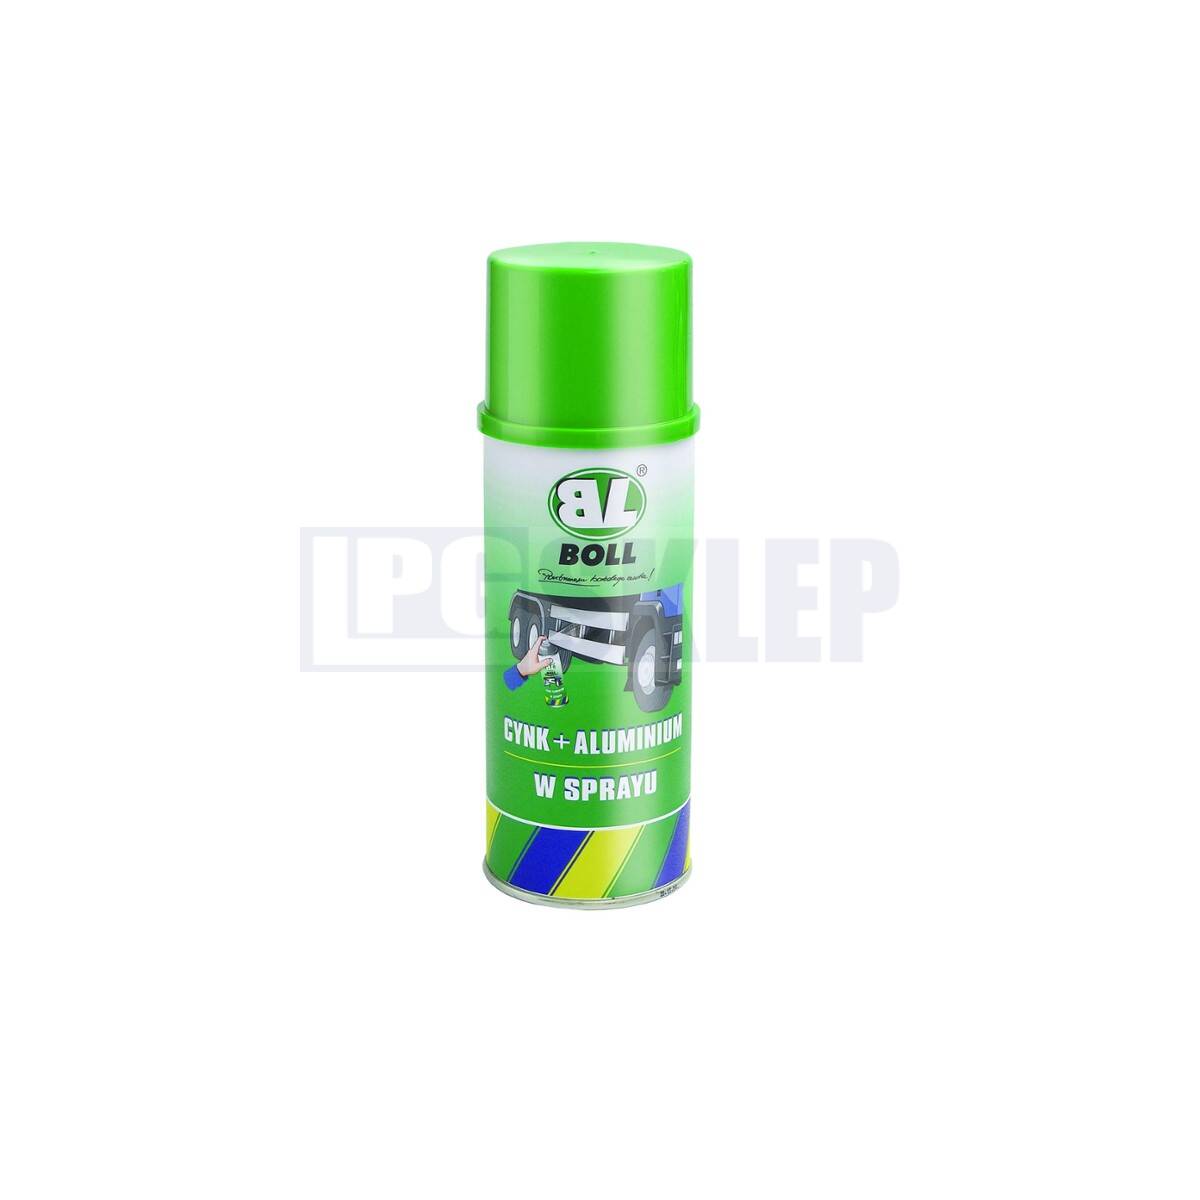 BOLL Cynk + aluminium - spray 400 ml (Photo 1)